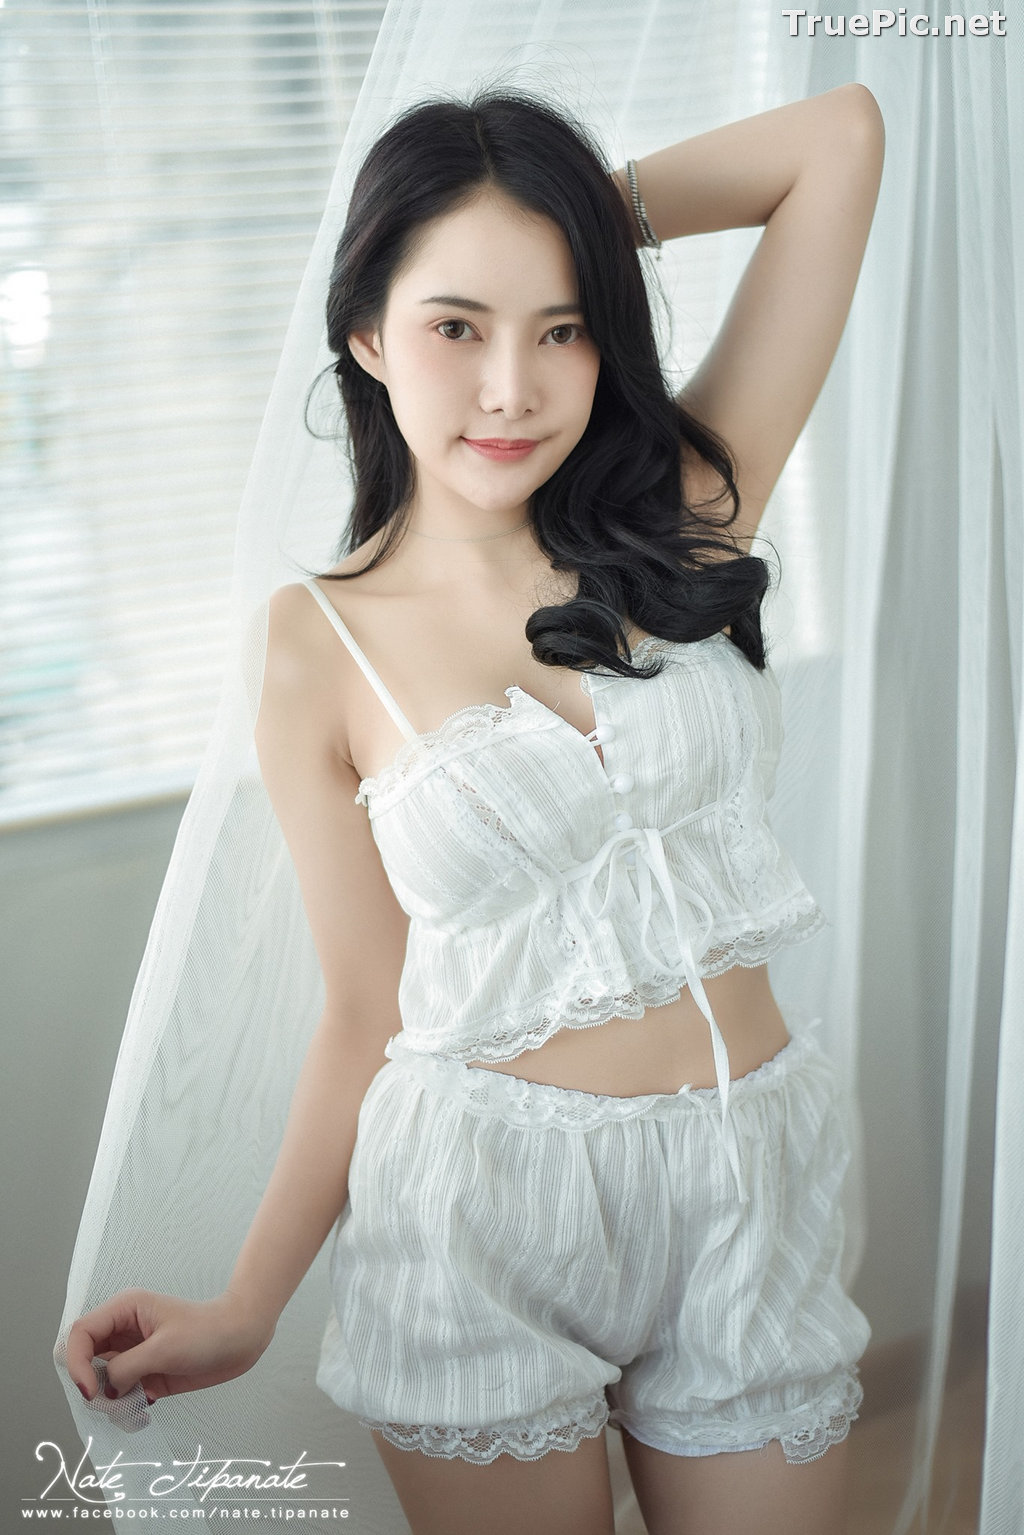 Image Thailand Model - Nattanicha Pw - Beautiful In White Sleepwear - TruePic.net - Picture-22